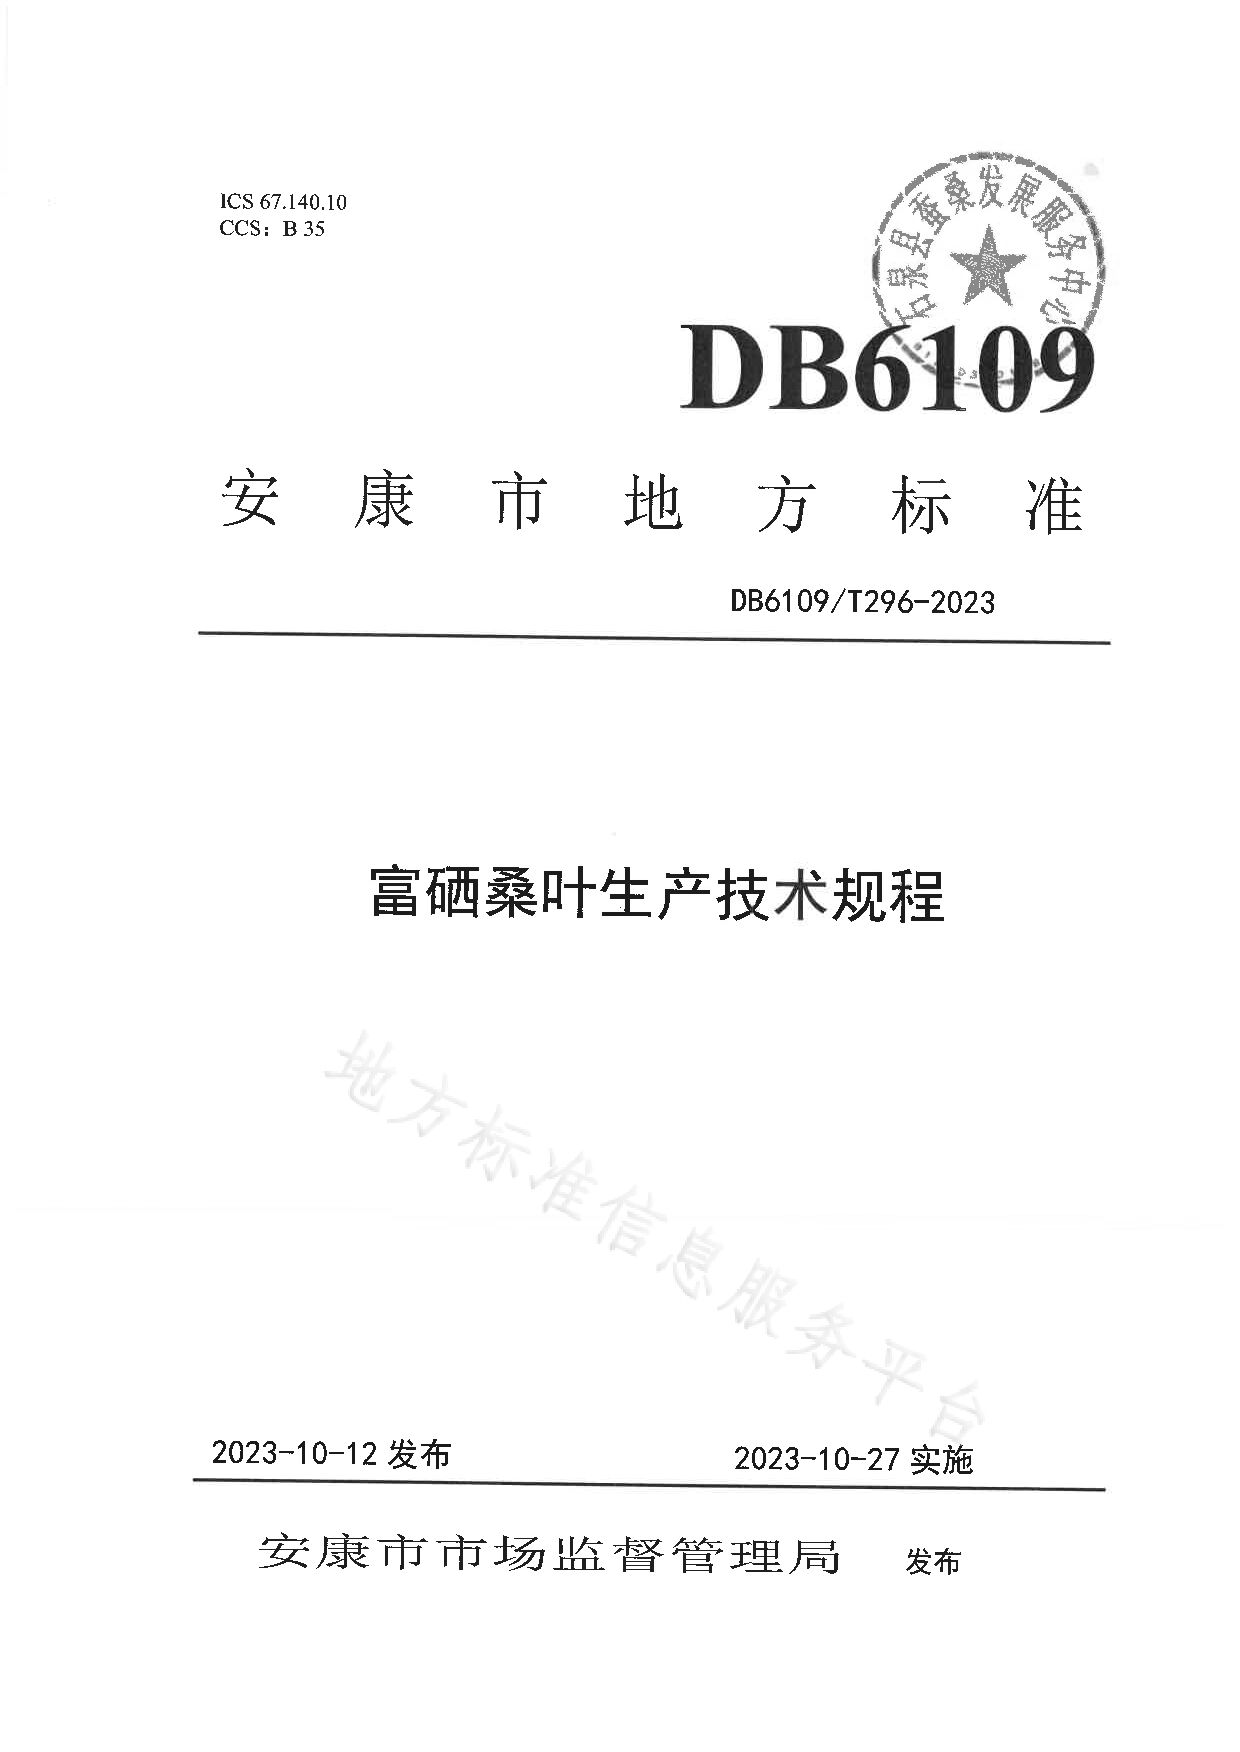 DB6109/T 296-2023